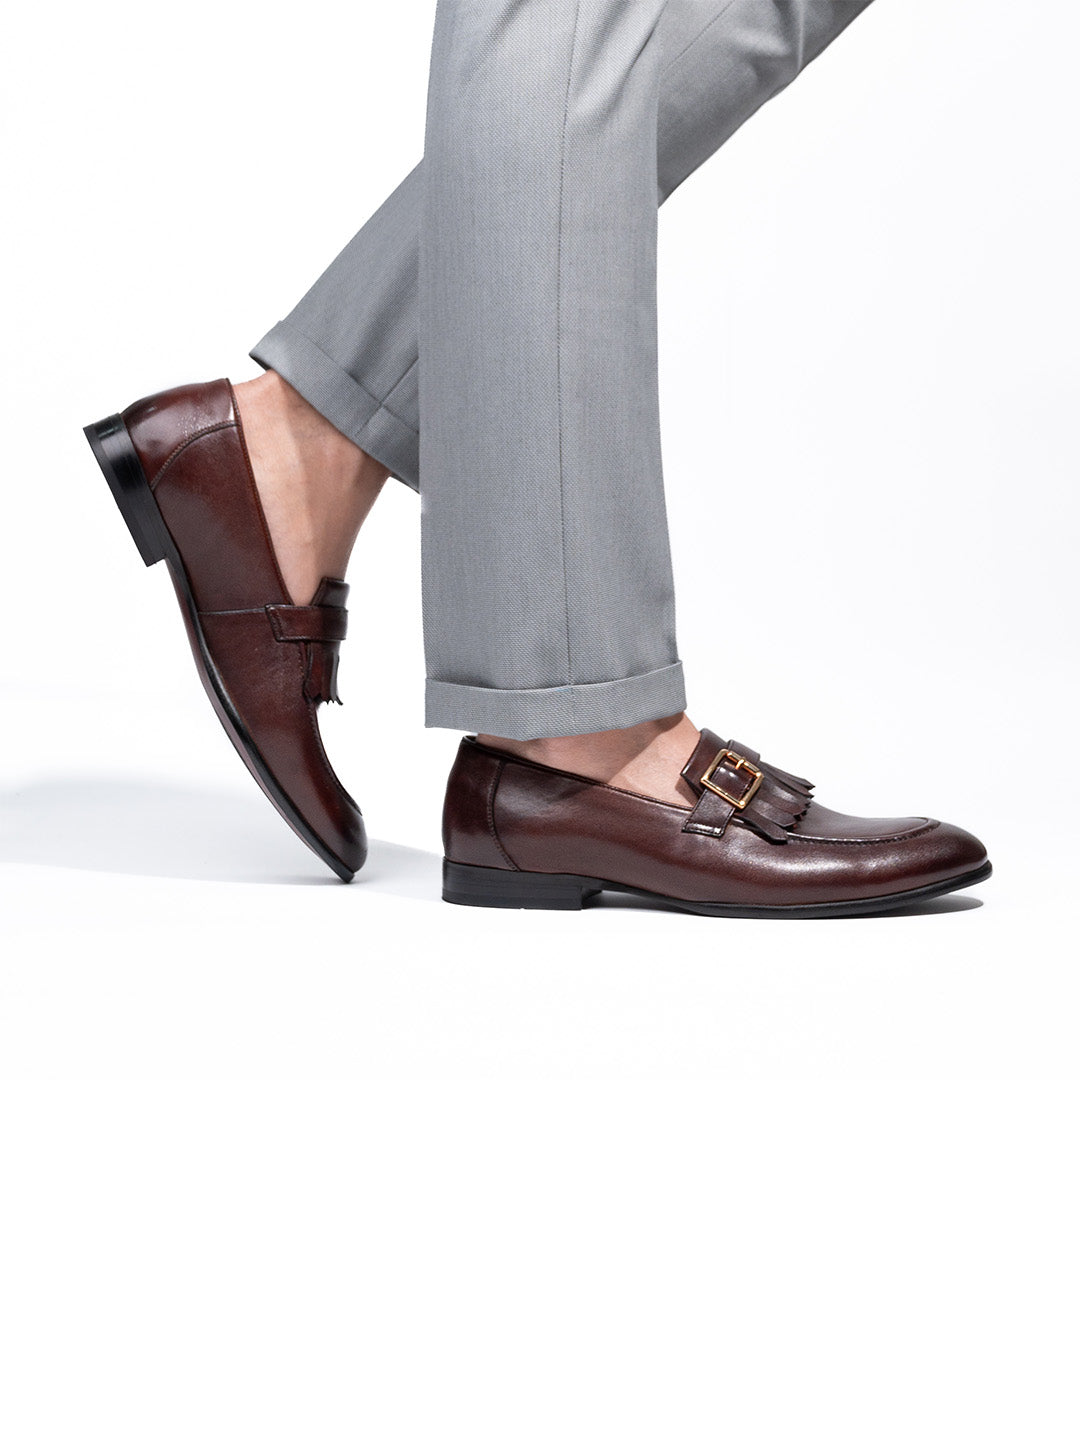 Men's Brown Leather Slip-On Loafer Shoes